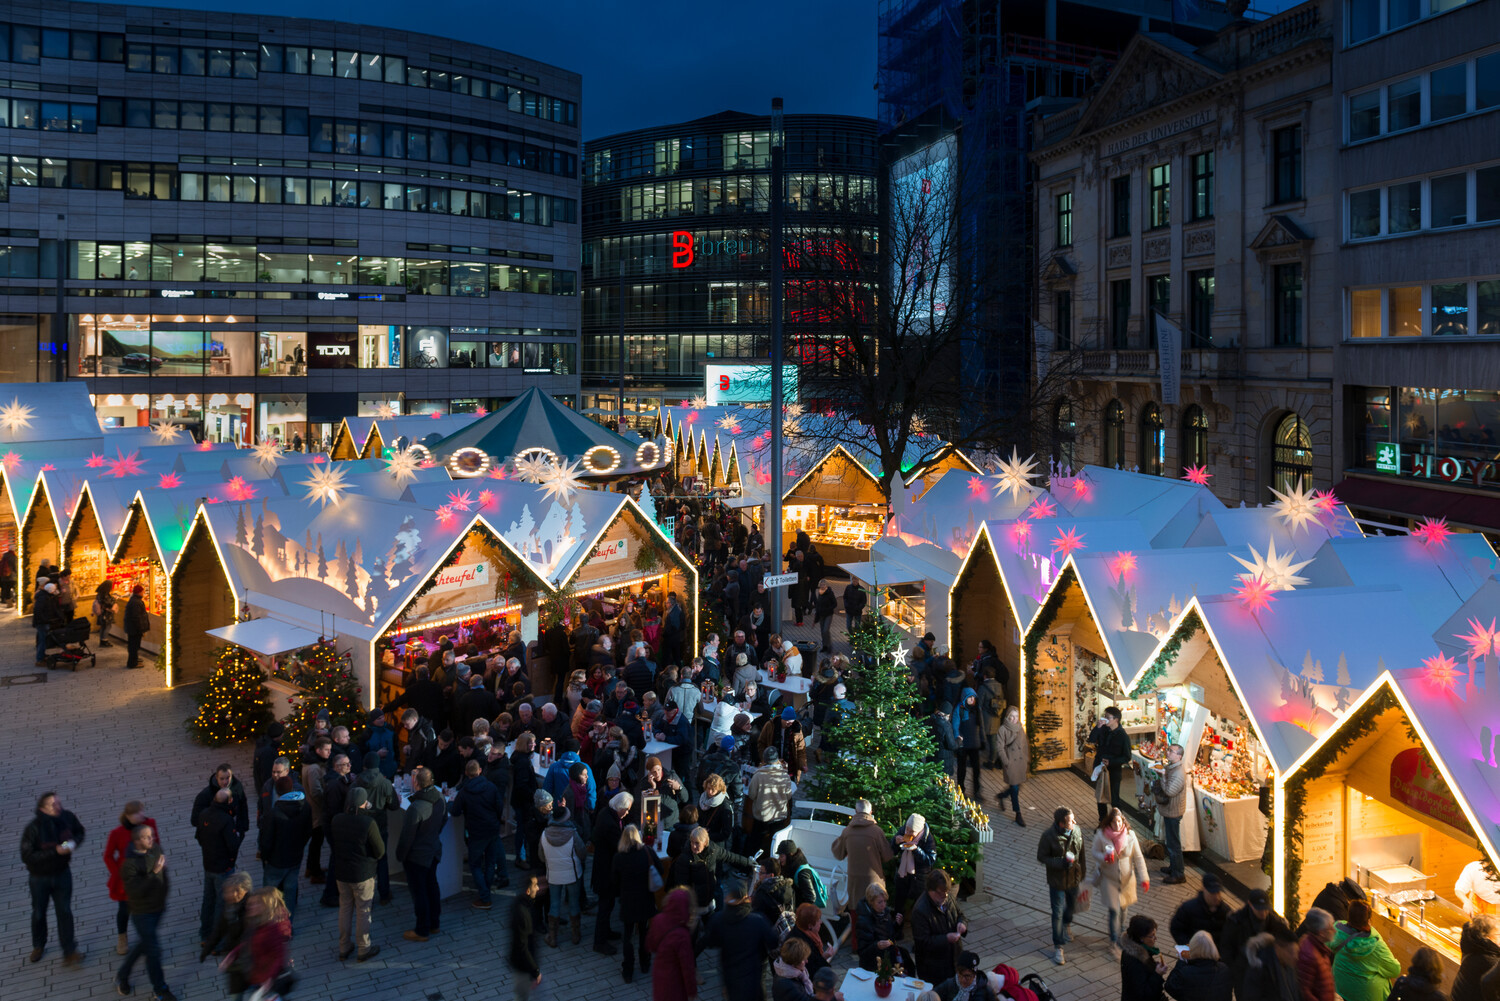 Märchen Markt Christmas Market is one of the most magical Christmas markets in Düsseldorf